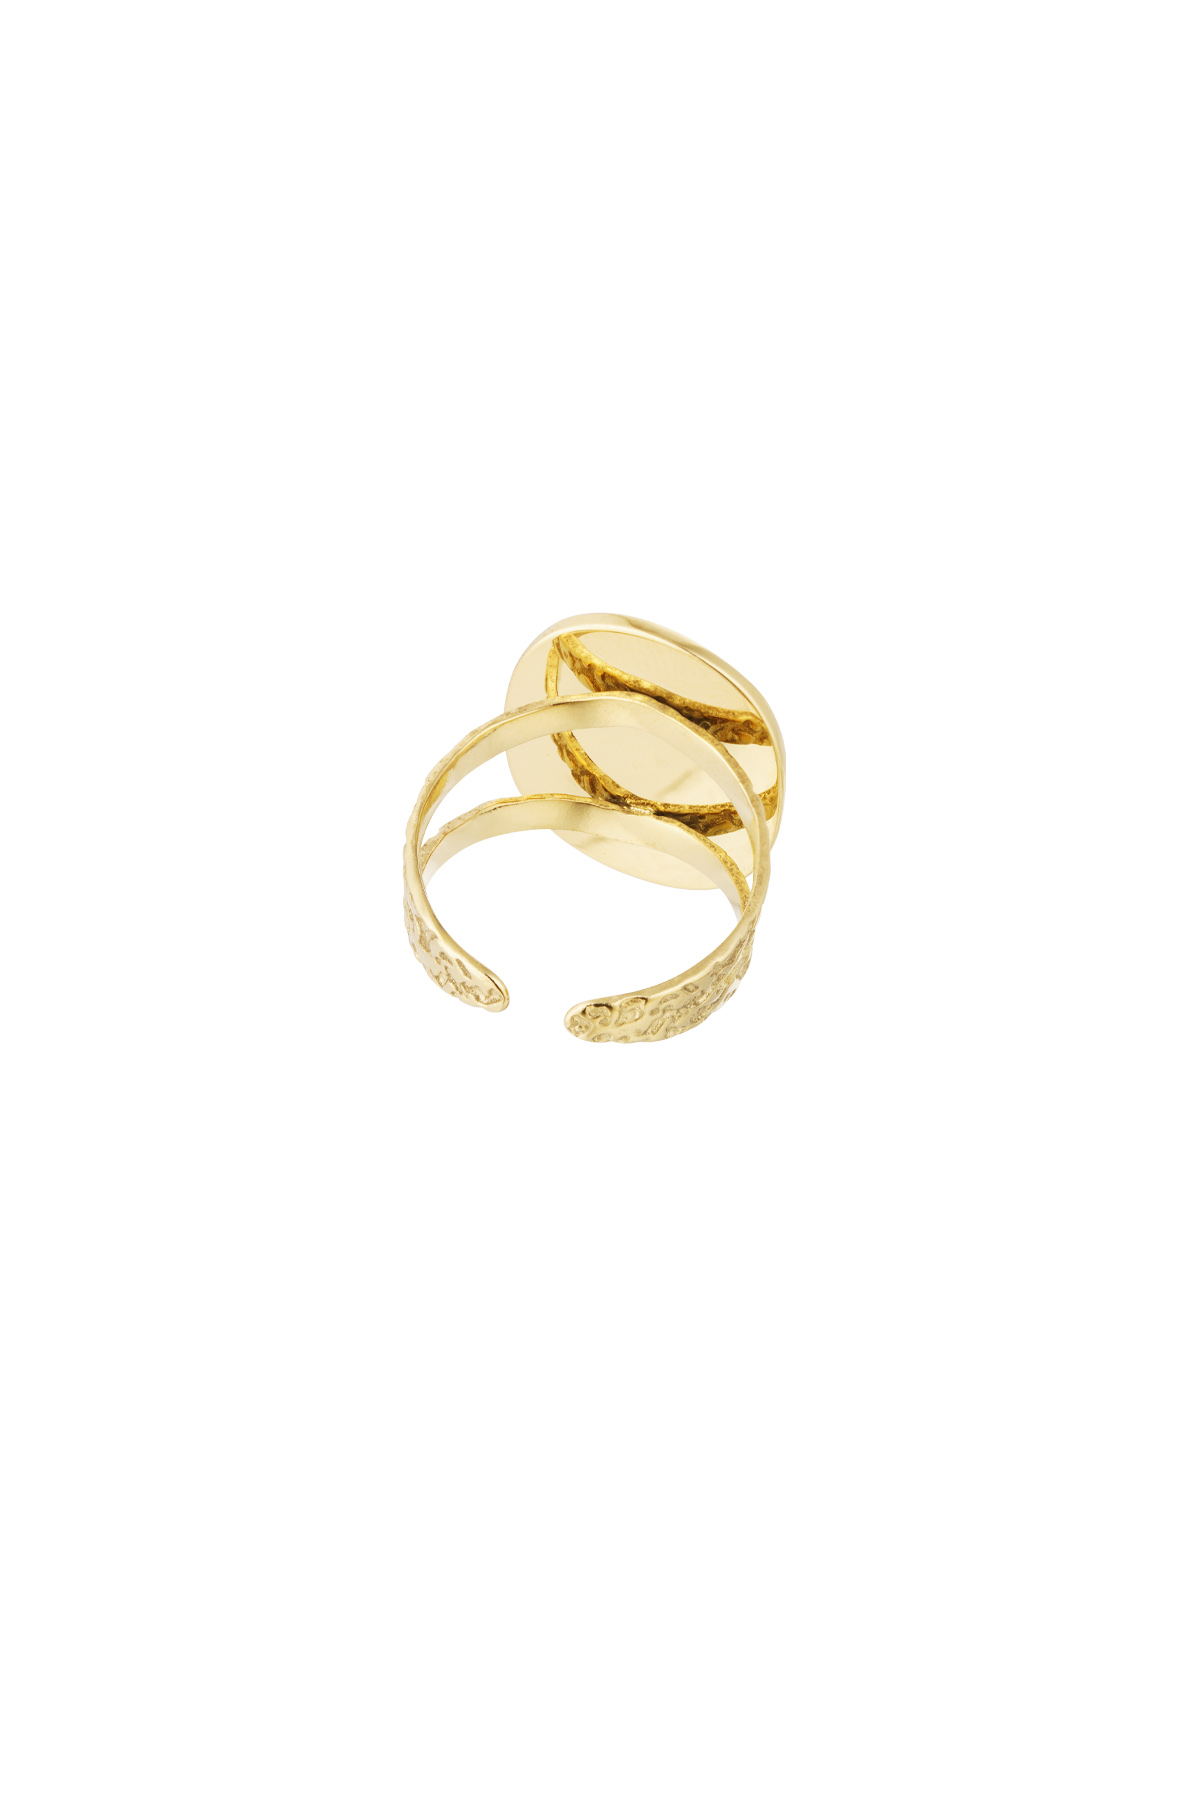 Ring steen met ster - goud/roze Afbeelding5